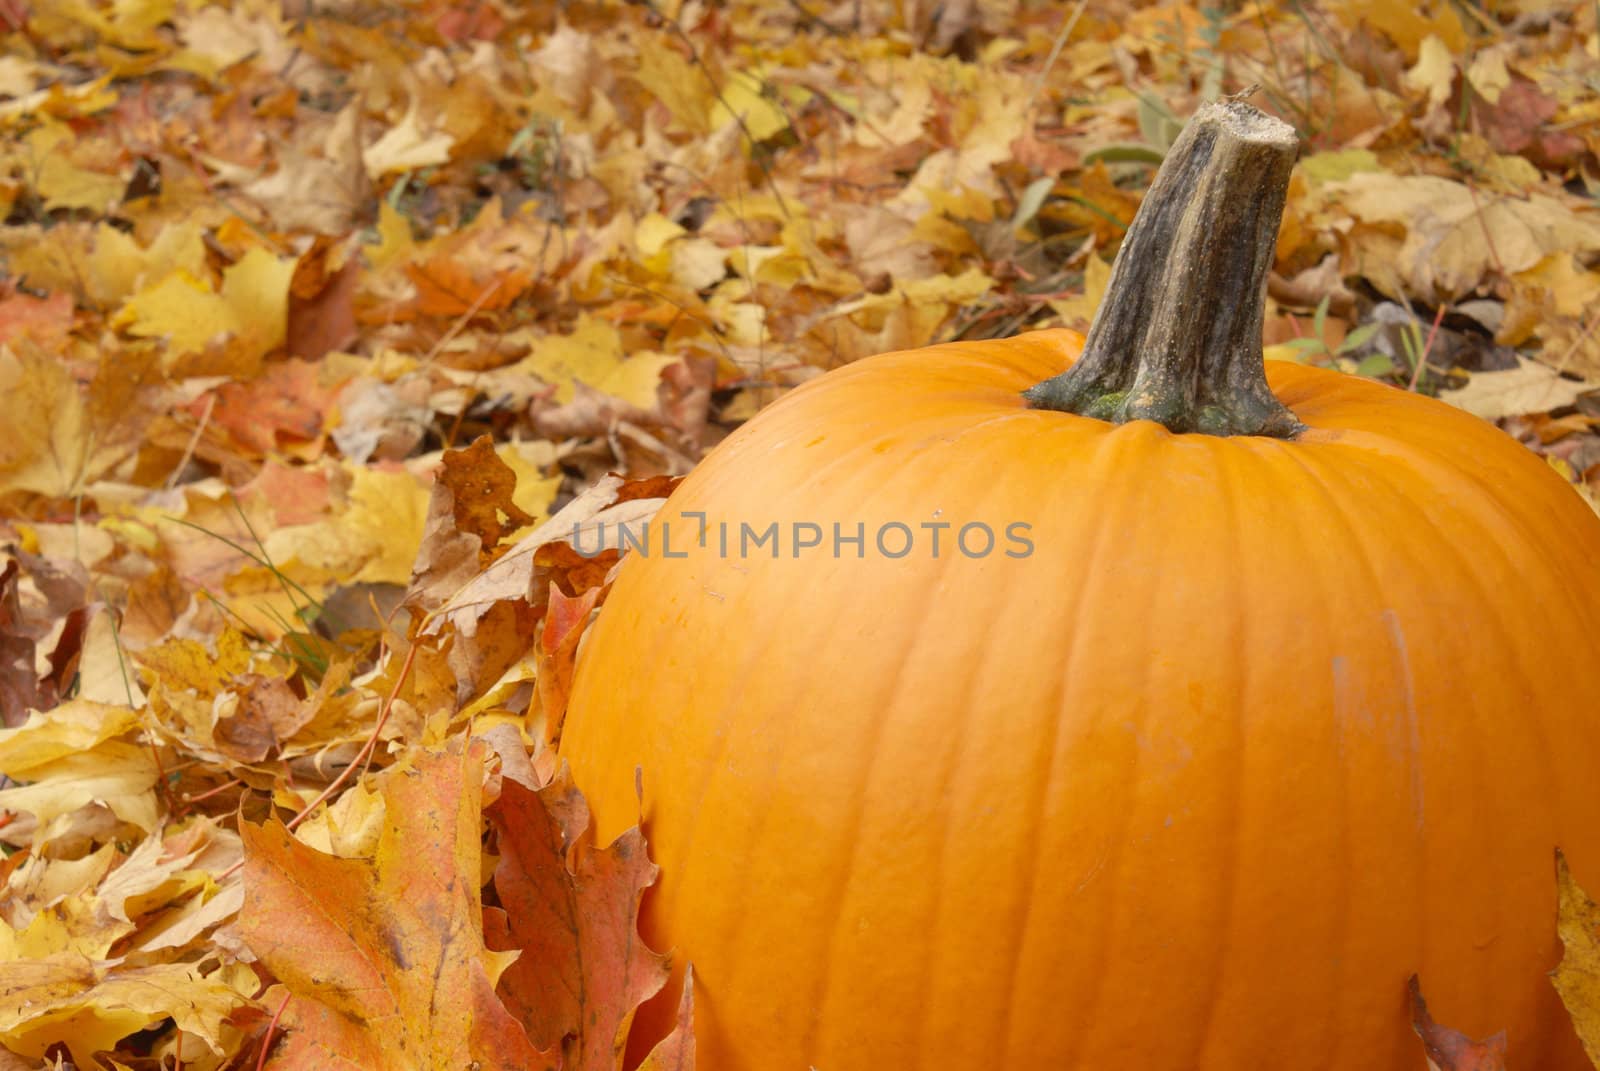 A fresh pumpkin sitting among the fallen leaves of autumn.